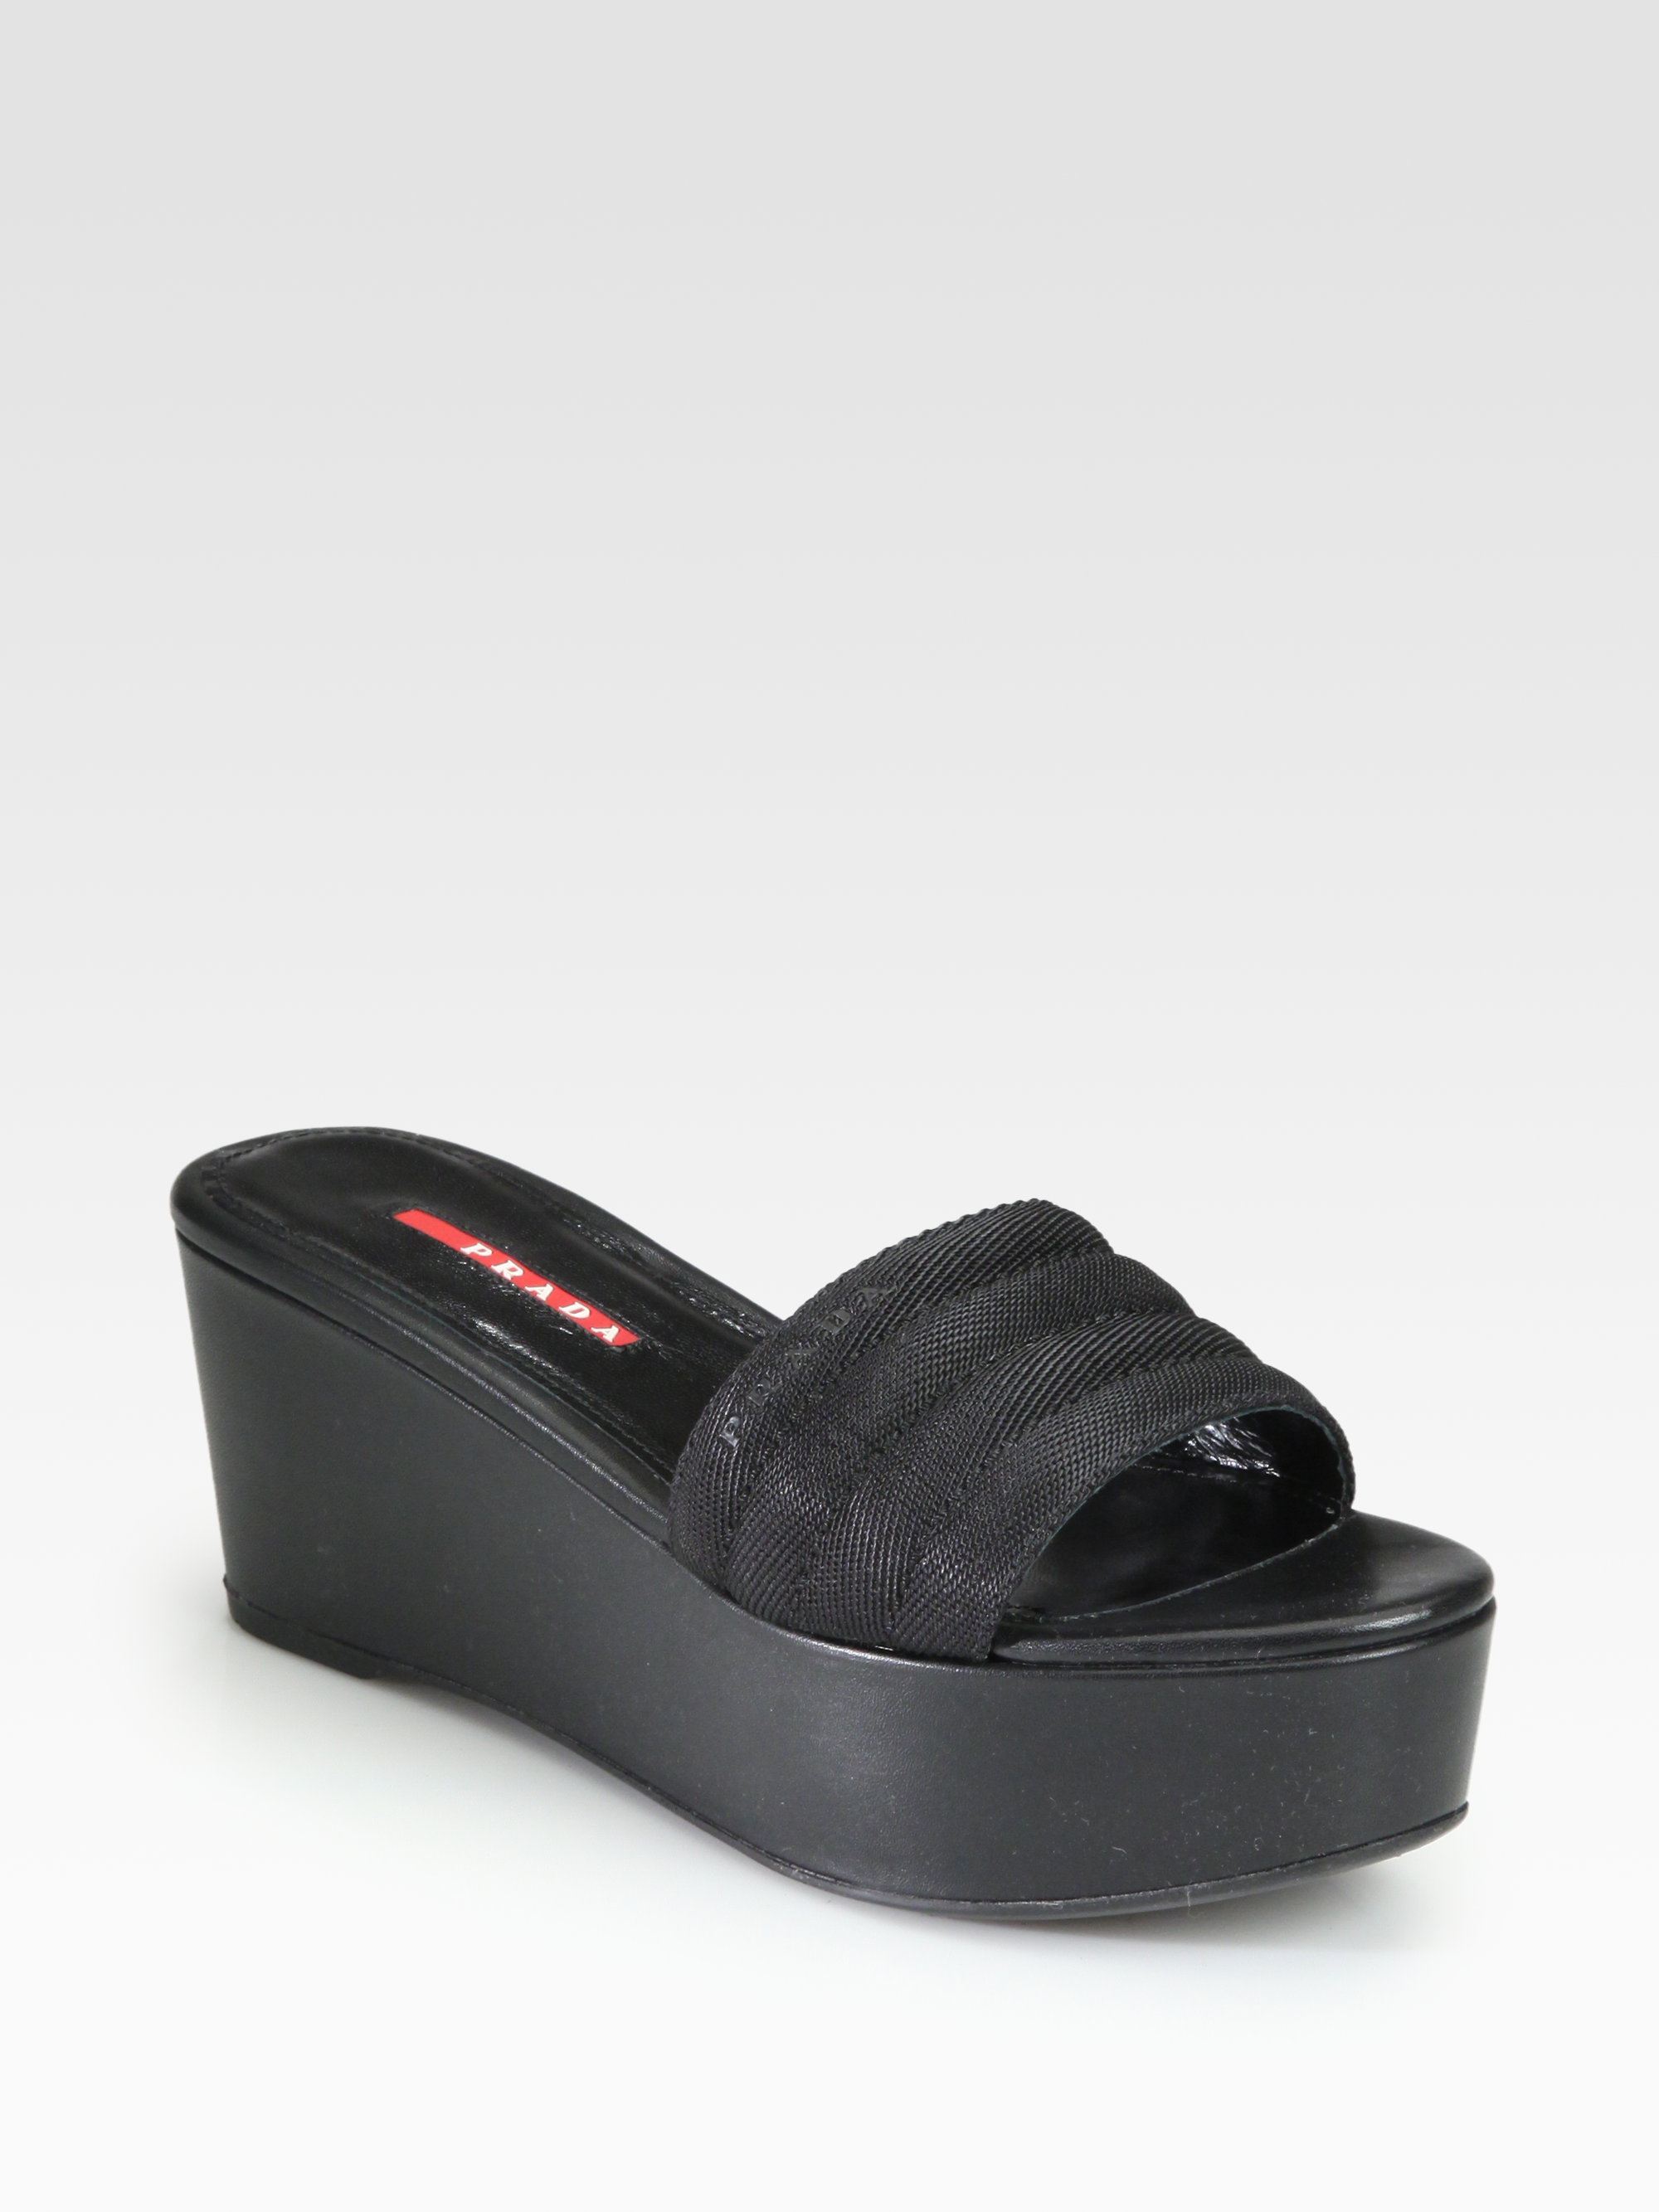 Prada Mesh Leather Wedge Slide Sandals in Black | Lyst